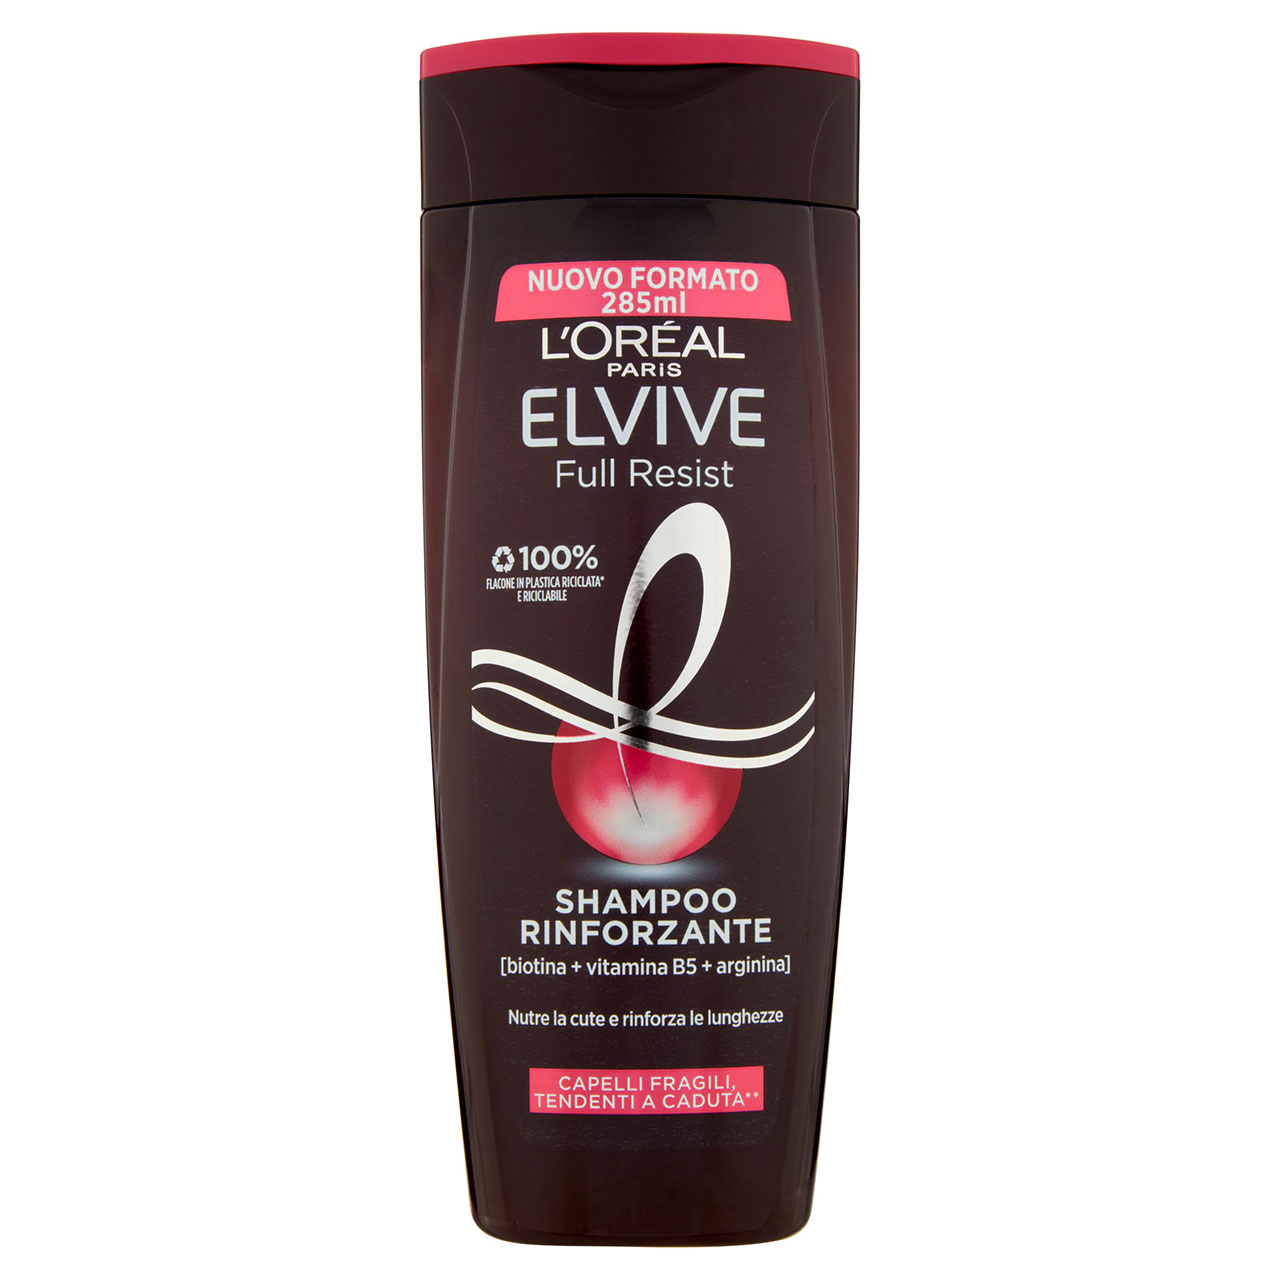 Shampoo Elvive Full Resist in vendita online